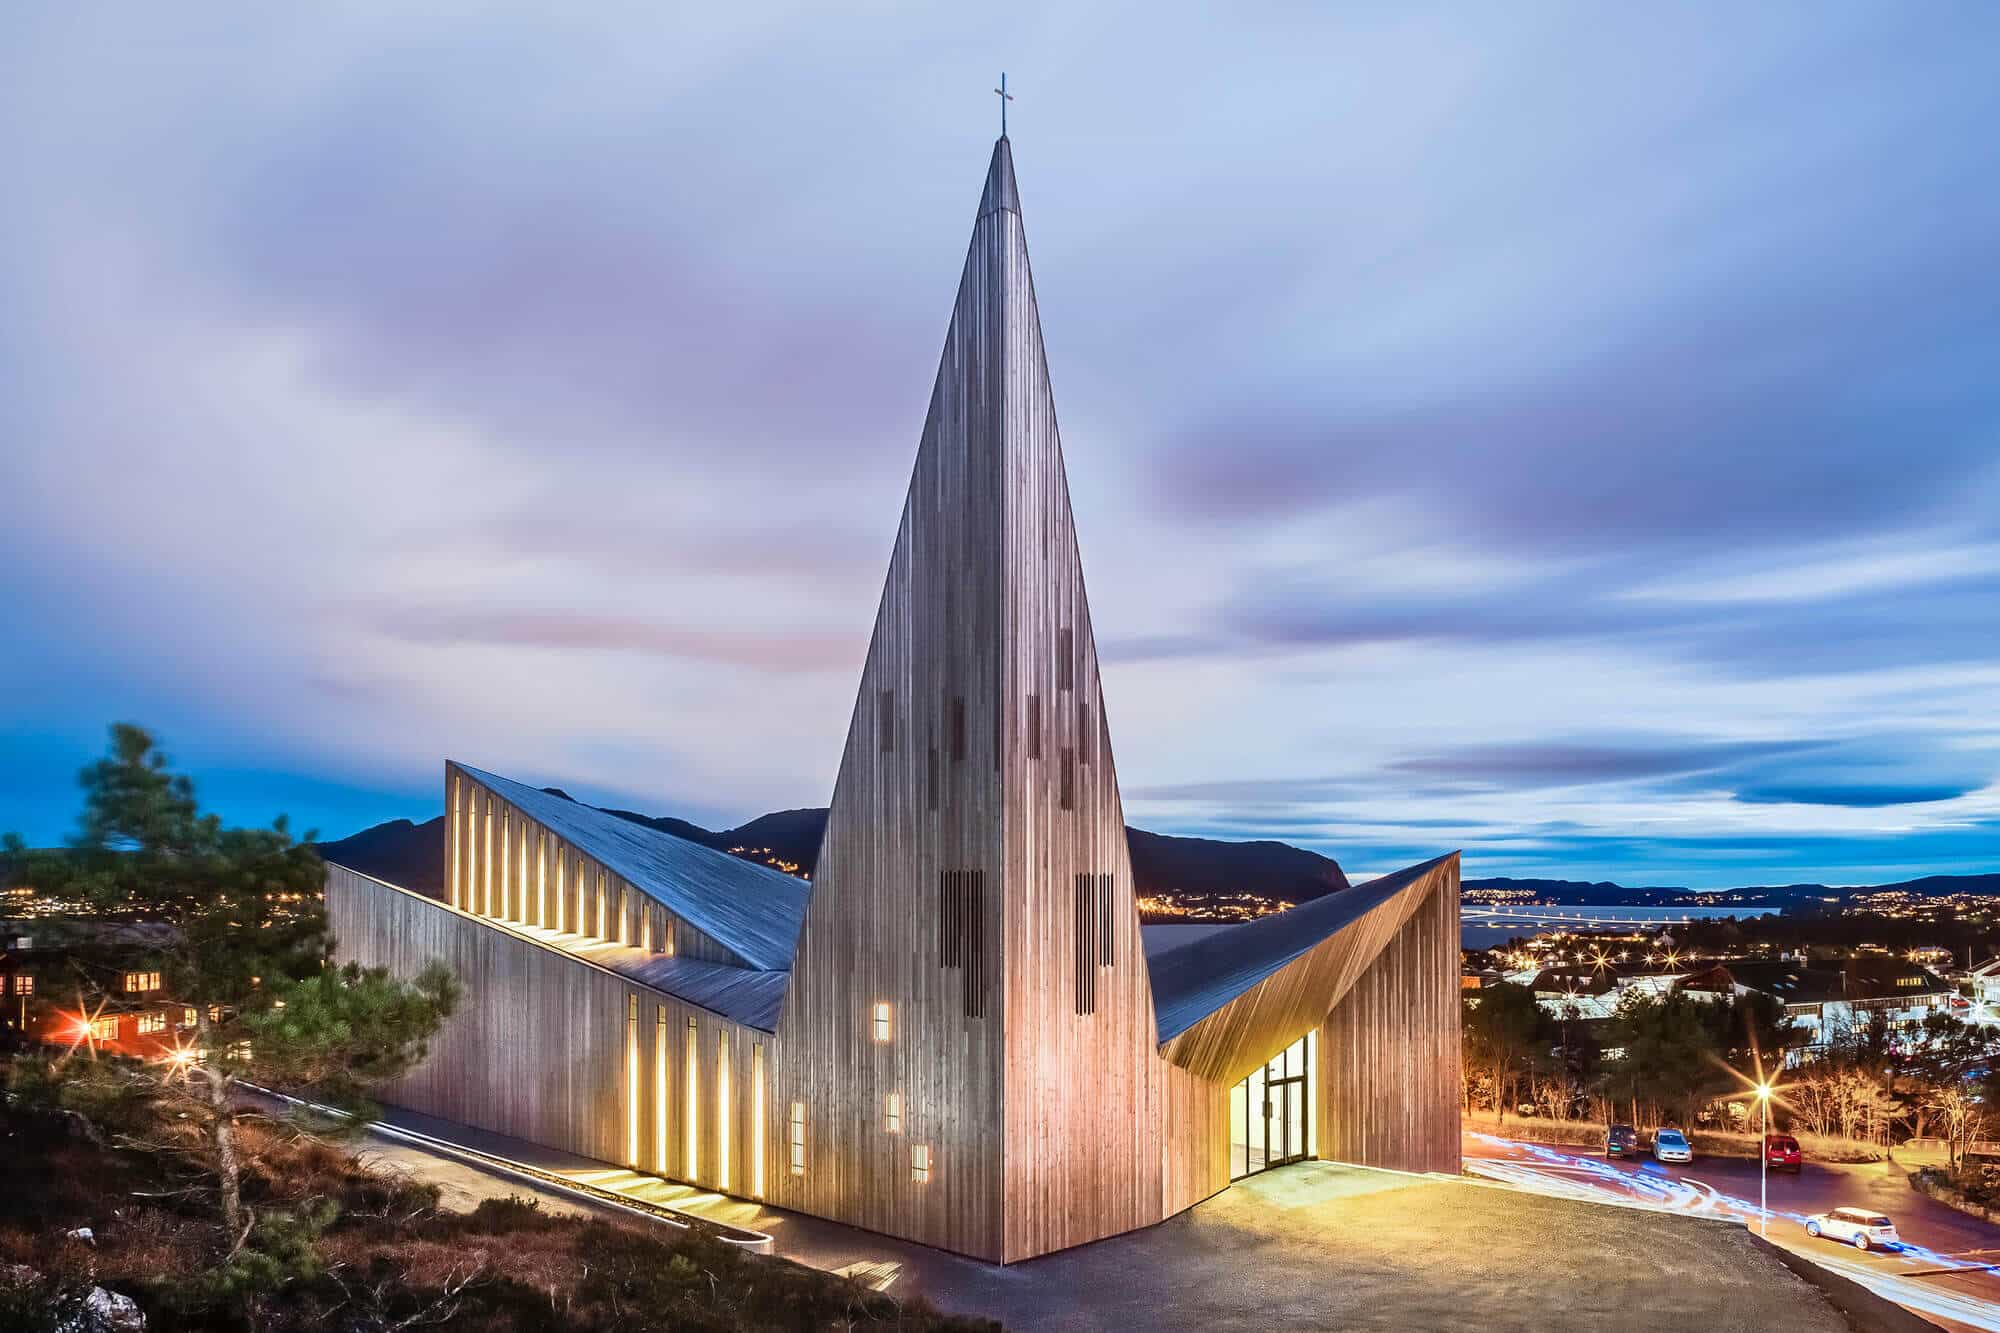 Community Church, Knarvik, Norway